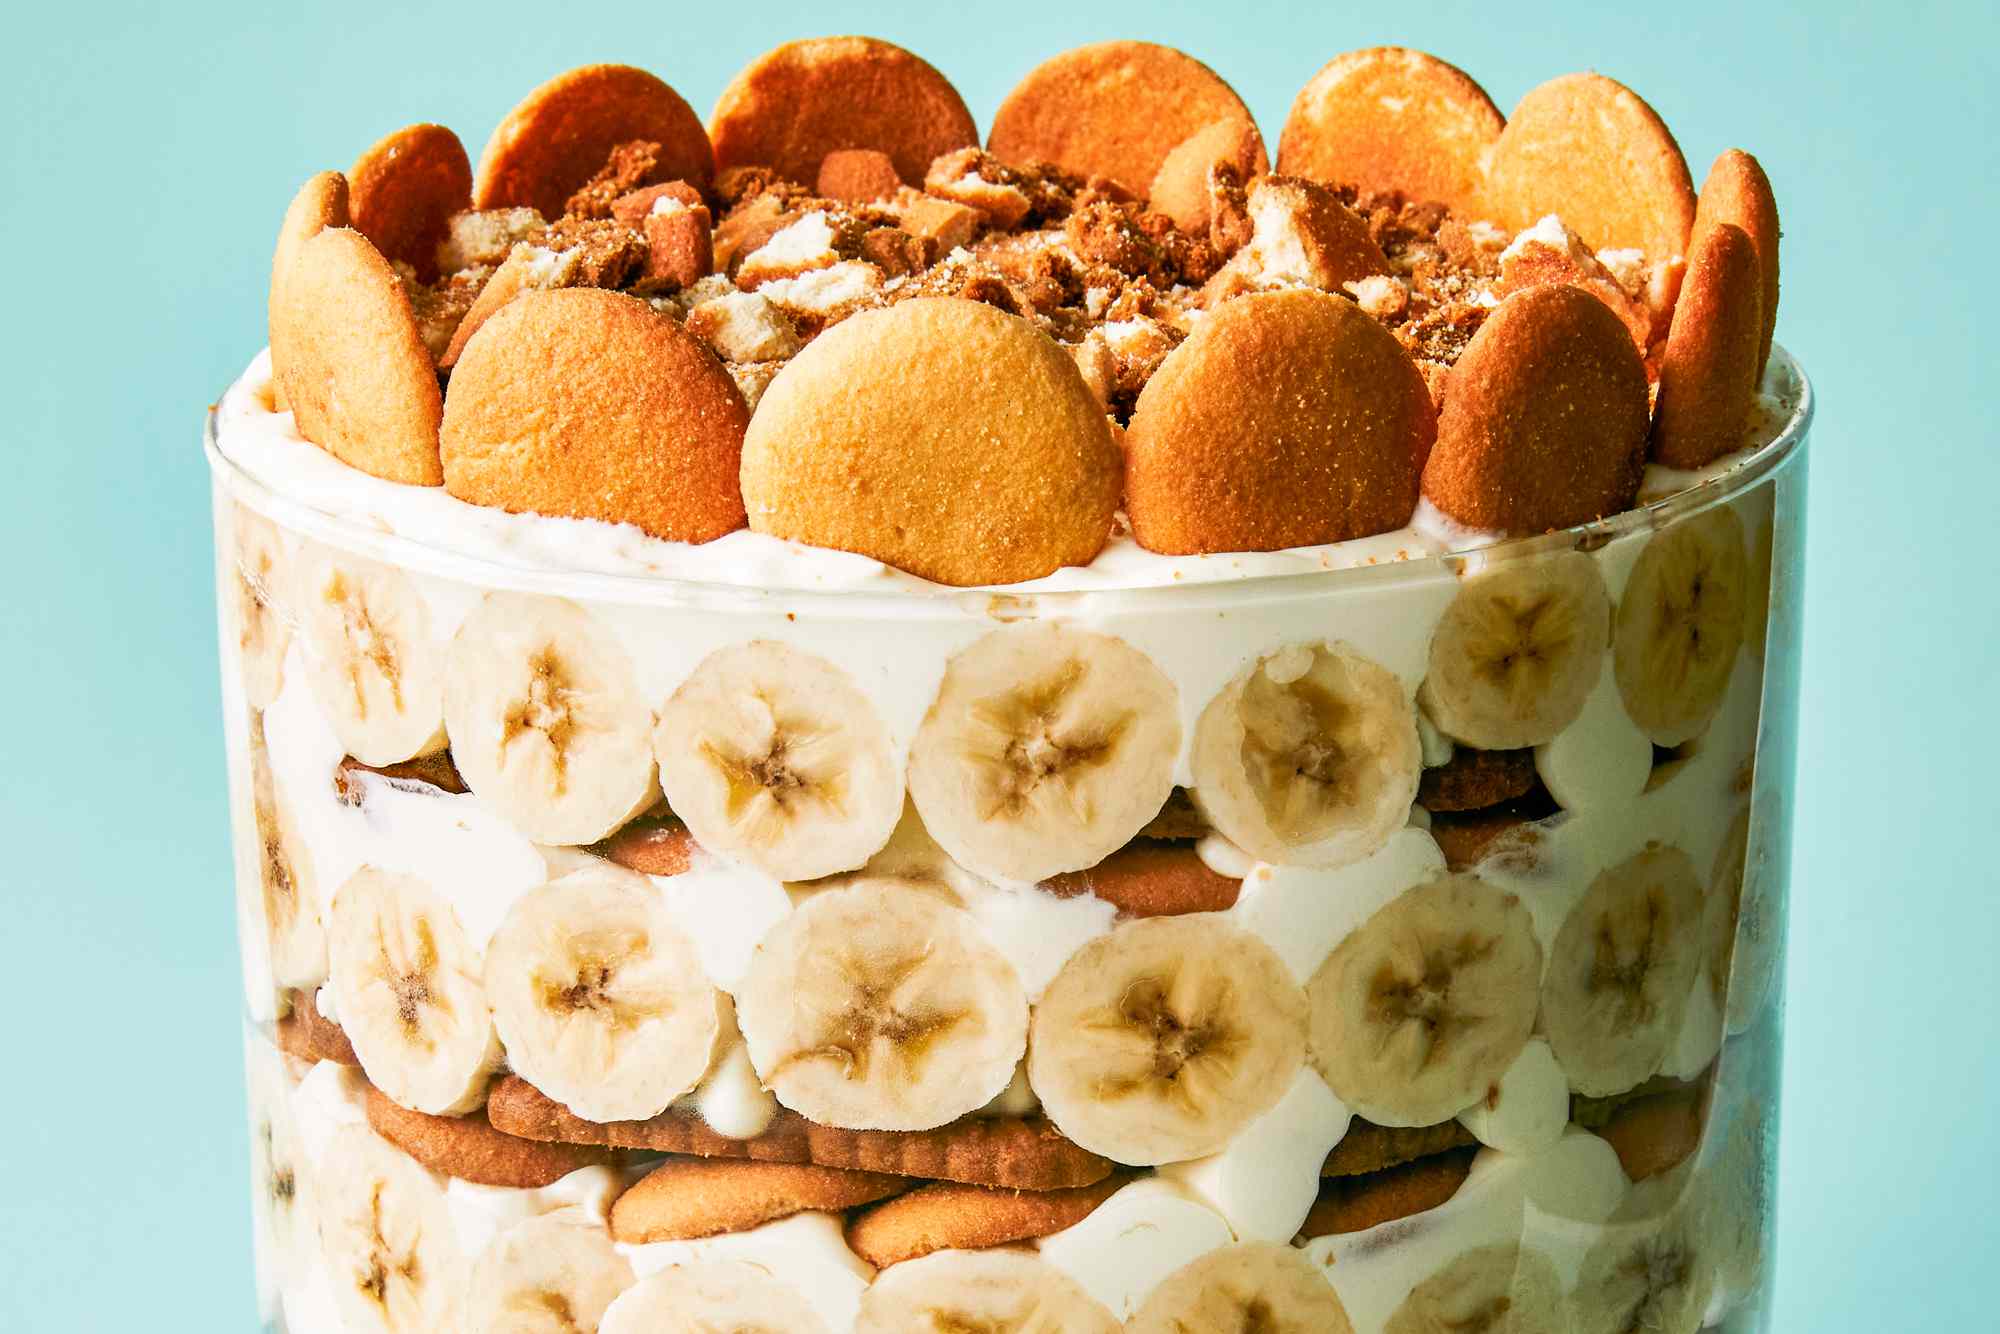 Use Every Banana With 15 Banana Recipes, From Nut Bread to Pudding